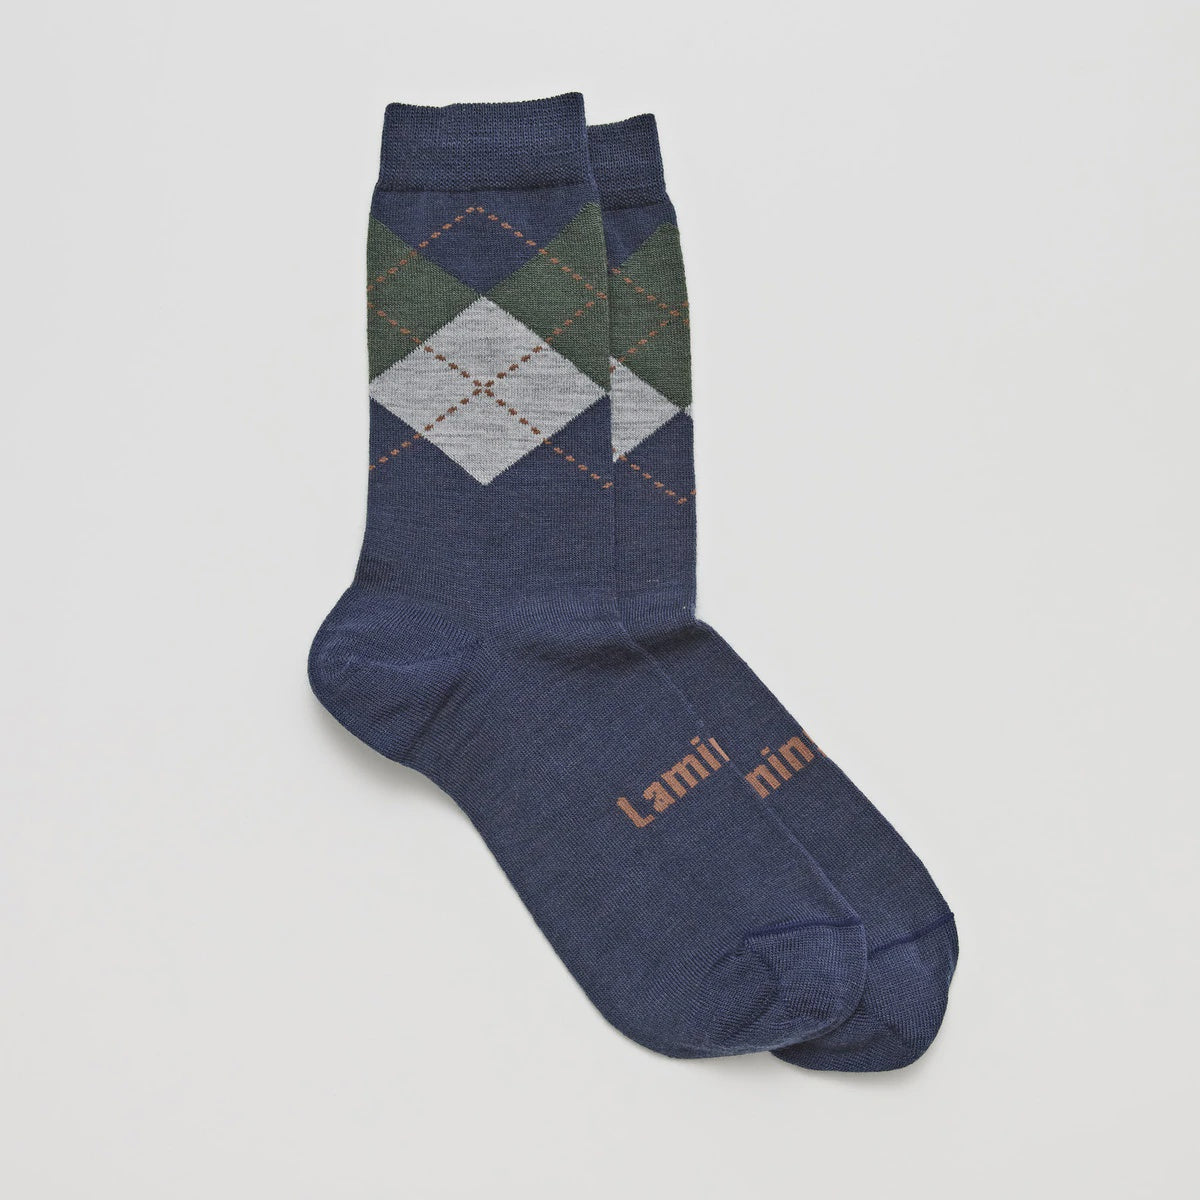 Lamington | Men's Merino Socks - Duke - Found My Way Invercargill